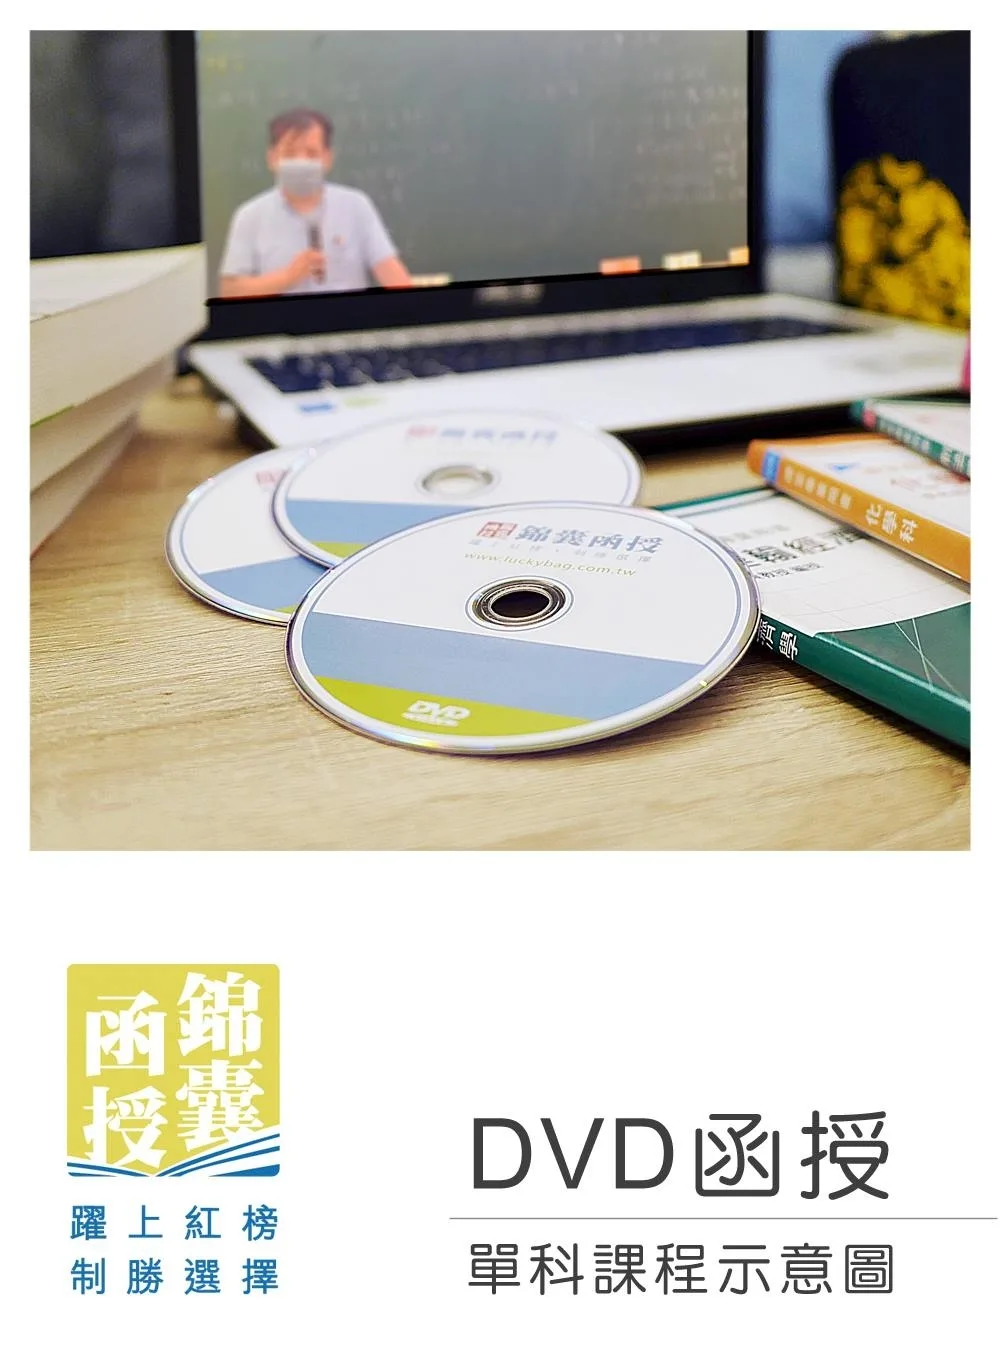 【DVD函授】郵政國文(閱讀測驗)-單科課程(111版)